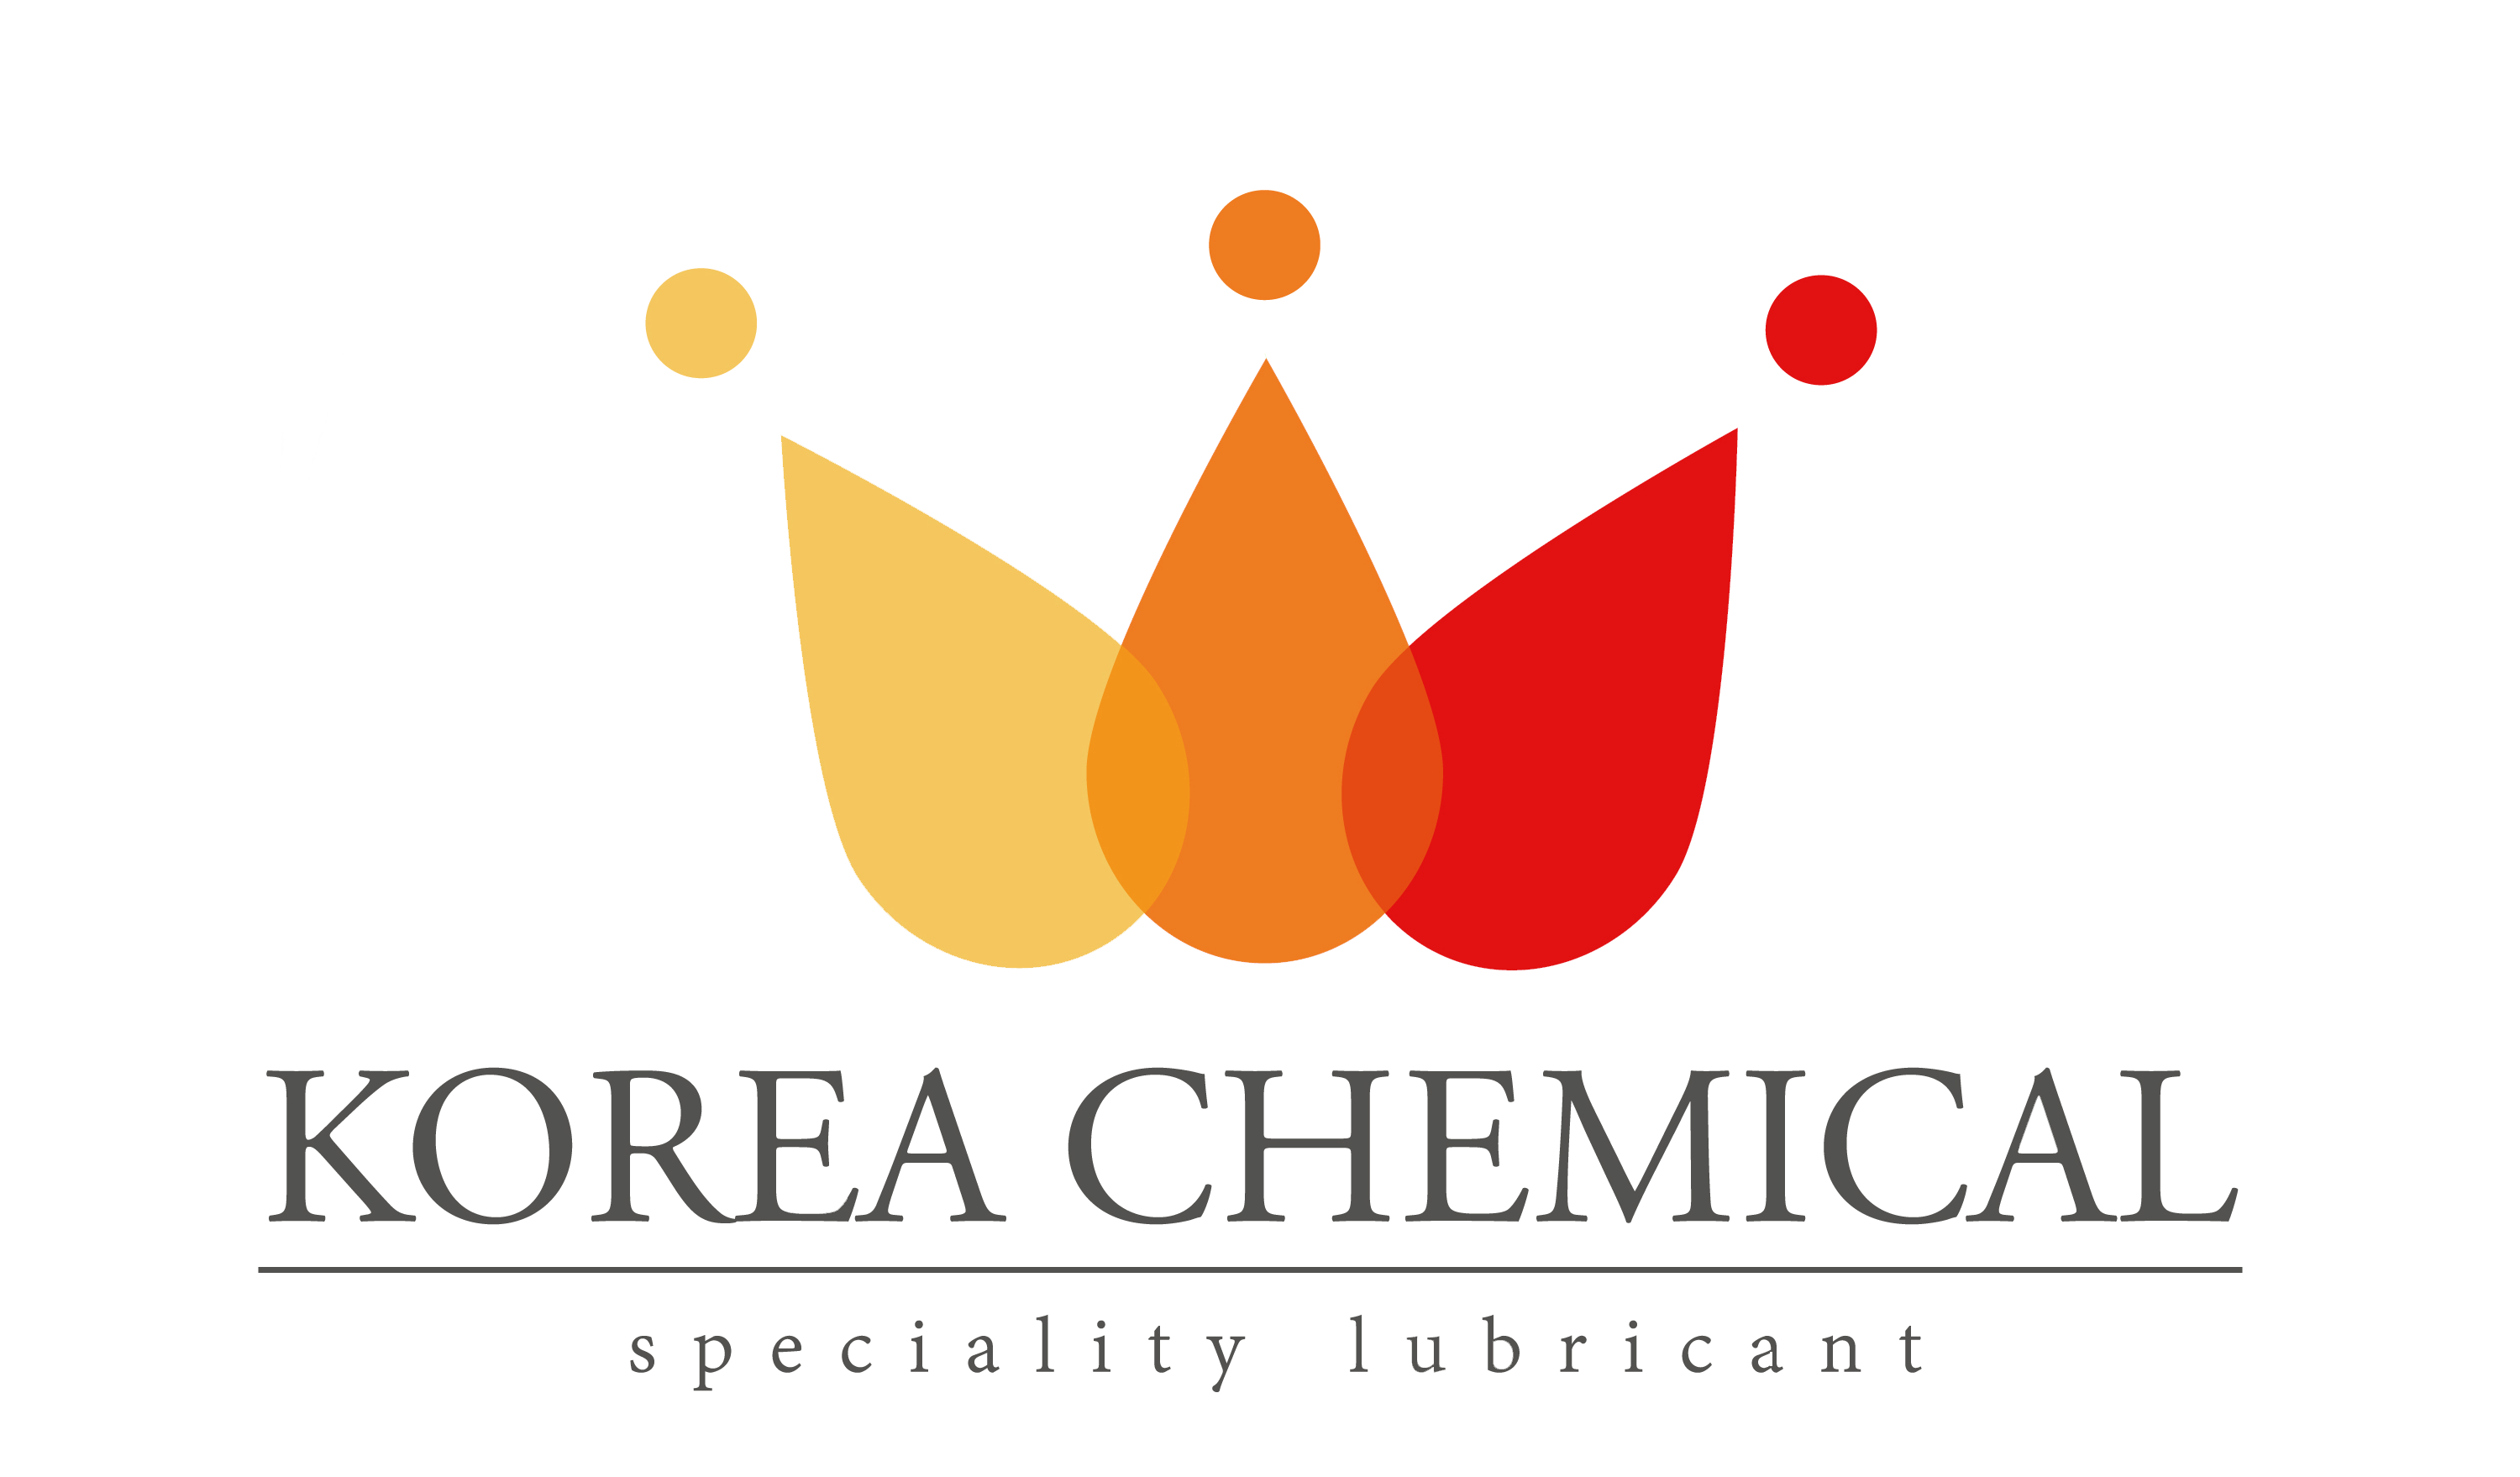 Korea Chemical Co., Ltd.